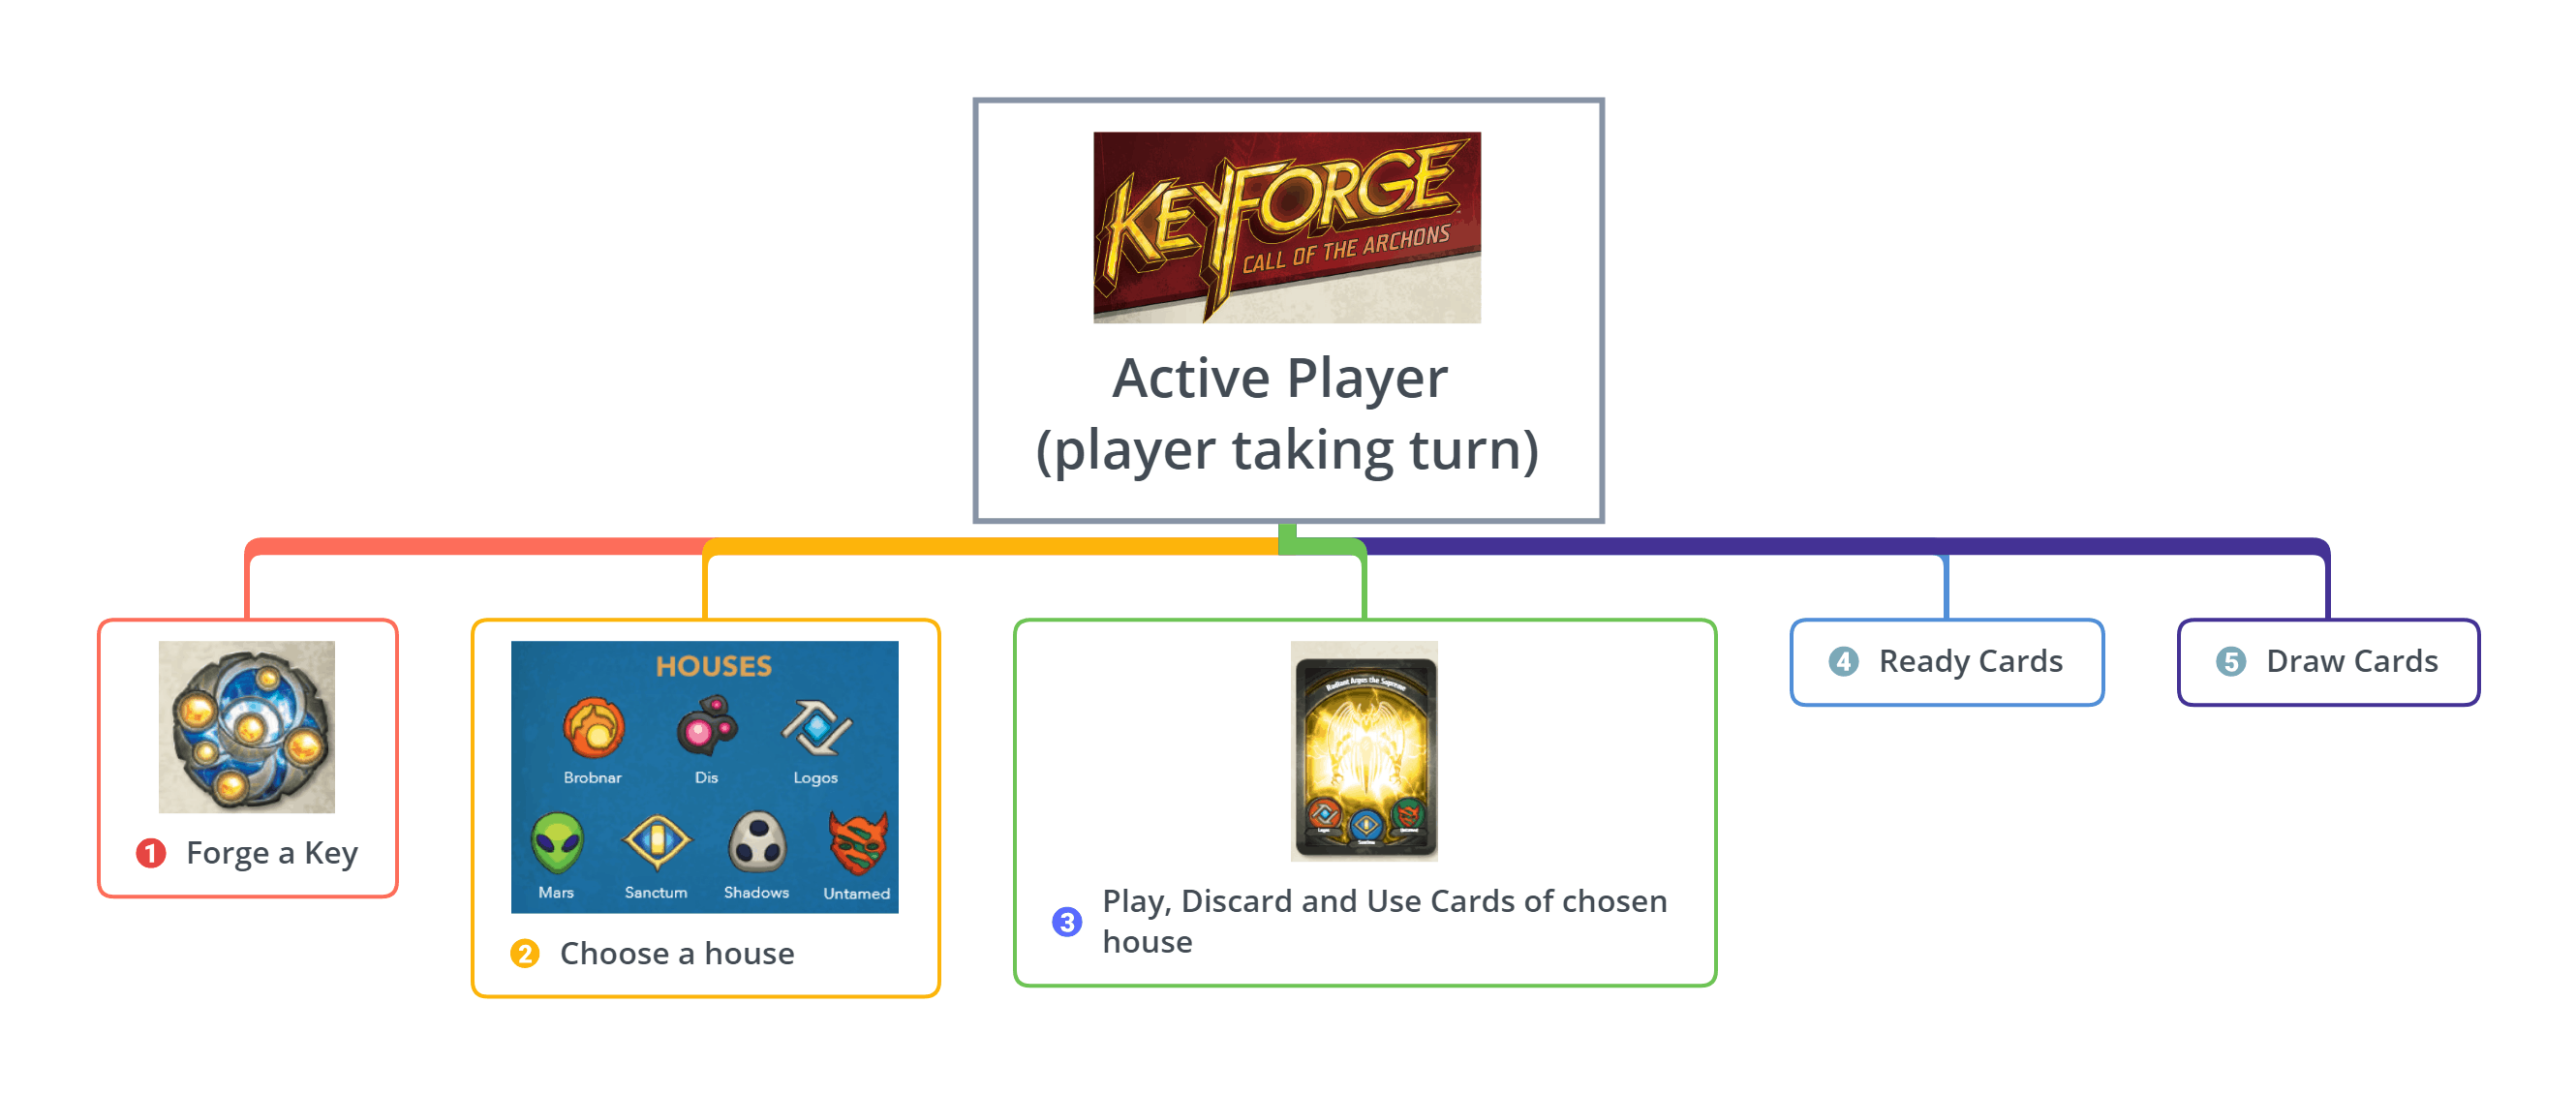 Keyforge active player turn steps